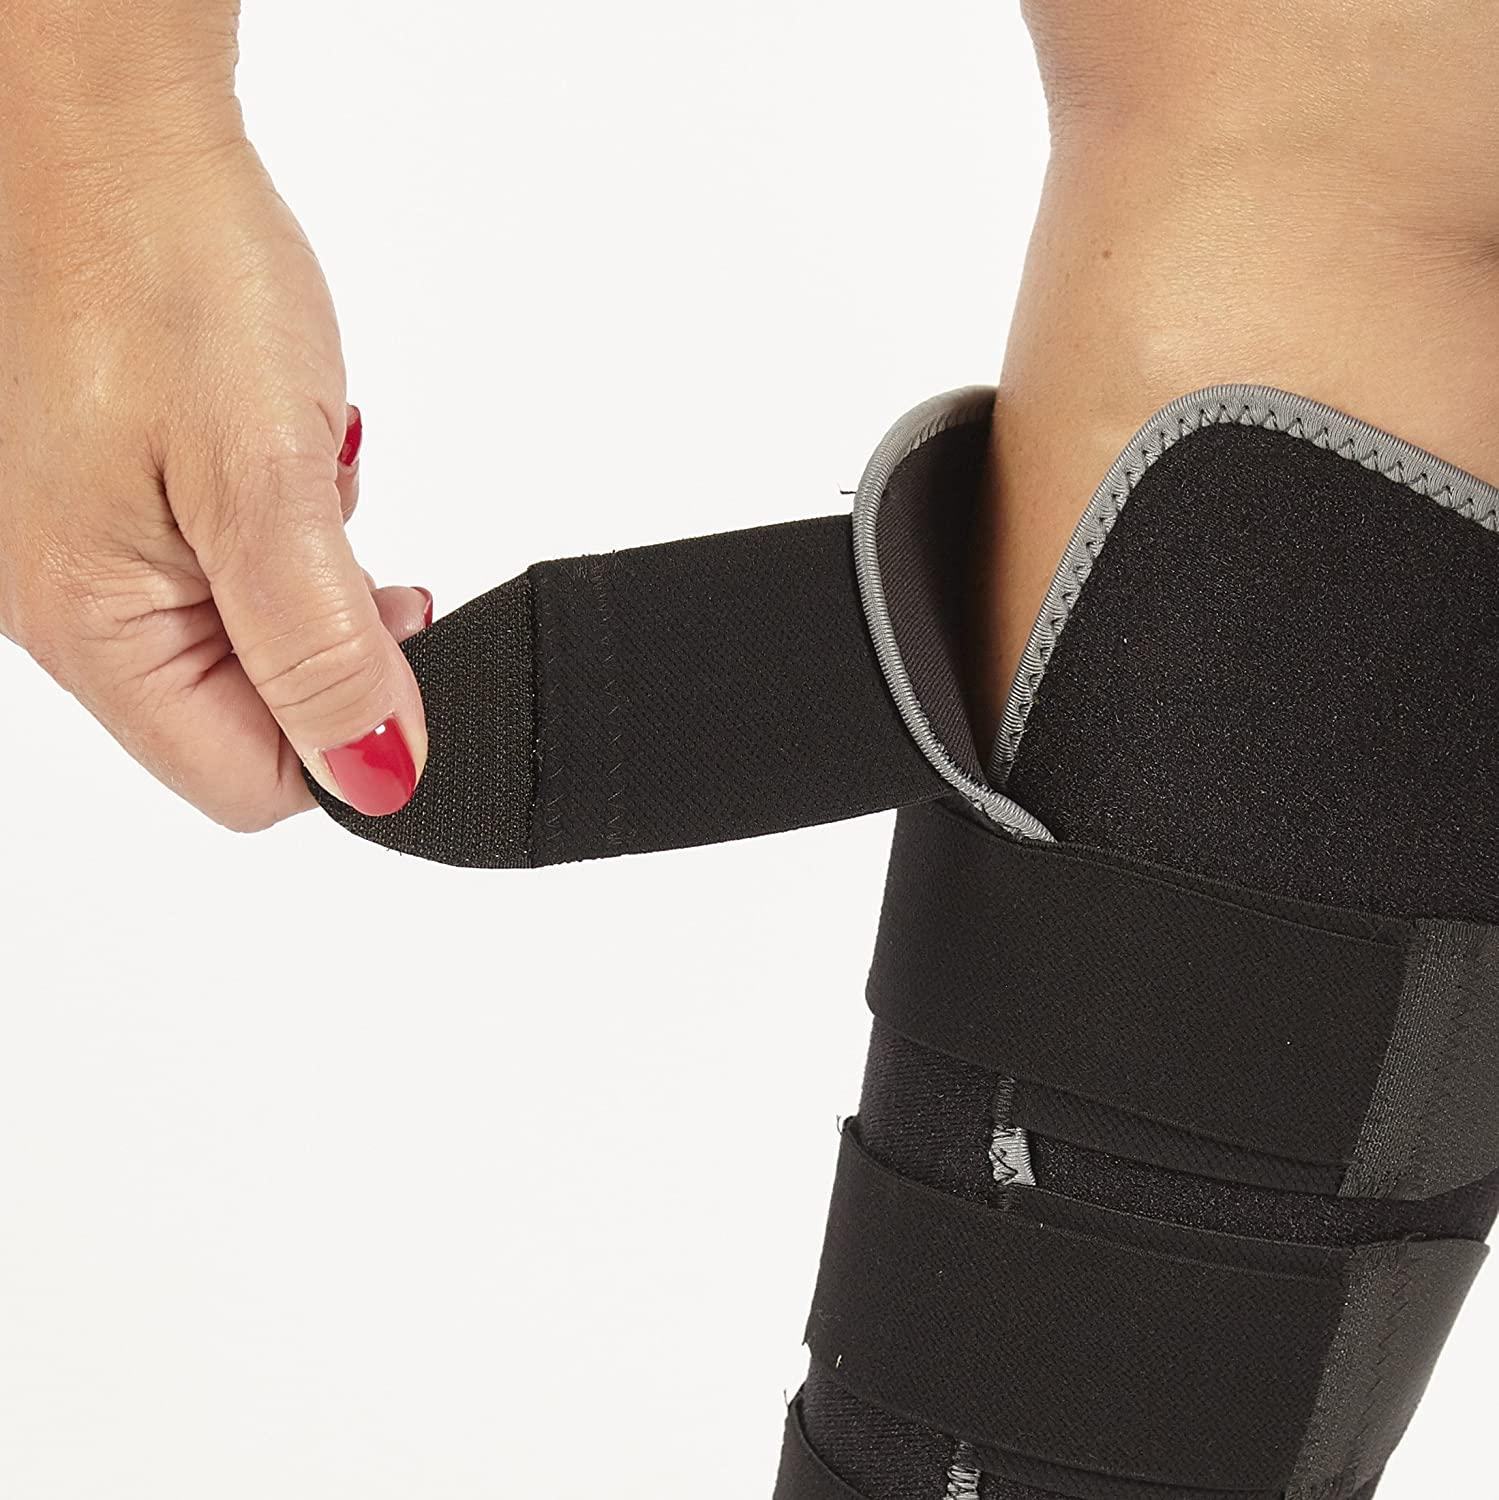 Buy Chekido calf support for men pain relief Leg Wrap Calf Brace